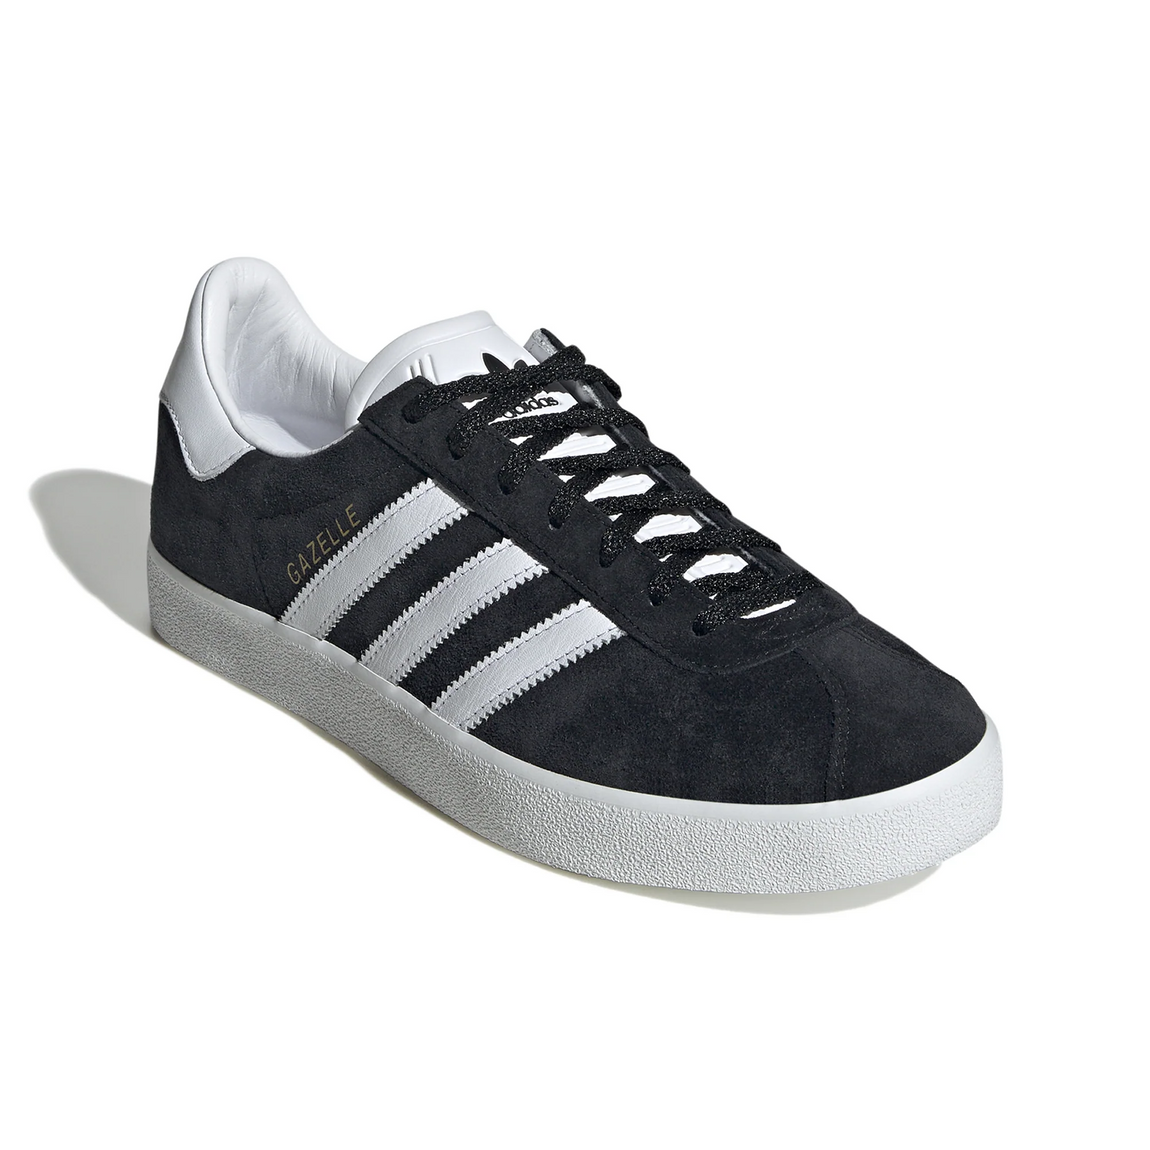 Adidas Gazelle 85 (Core Black/Footwear White-Gold Metallic) - Adidas Gazelle 85 (Core Black/Footwear White-Gold Metallic) - 